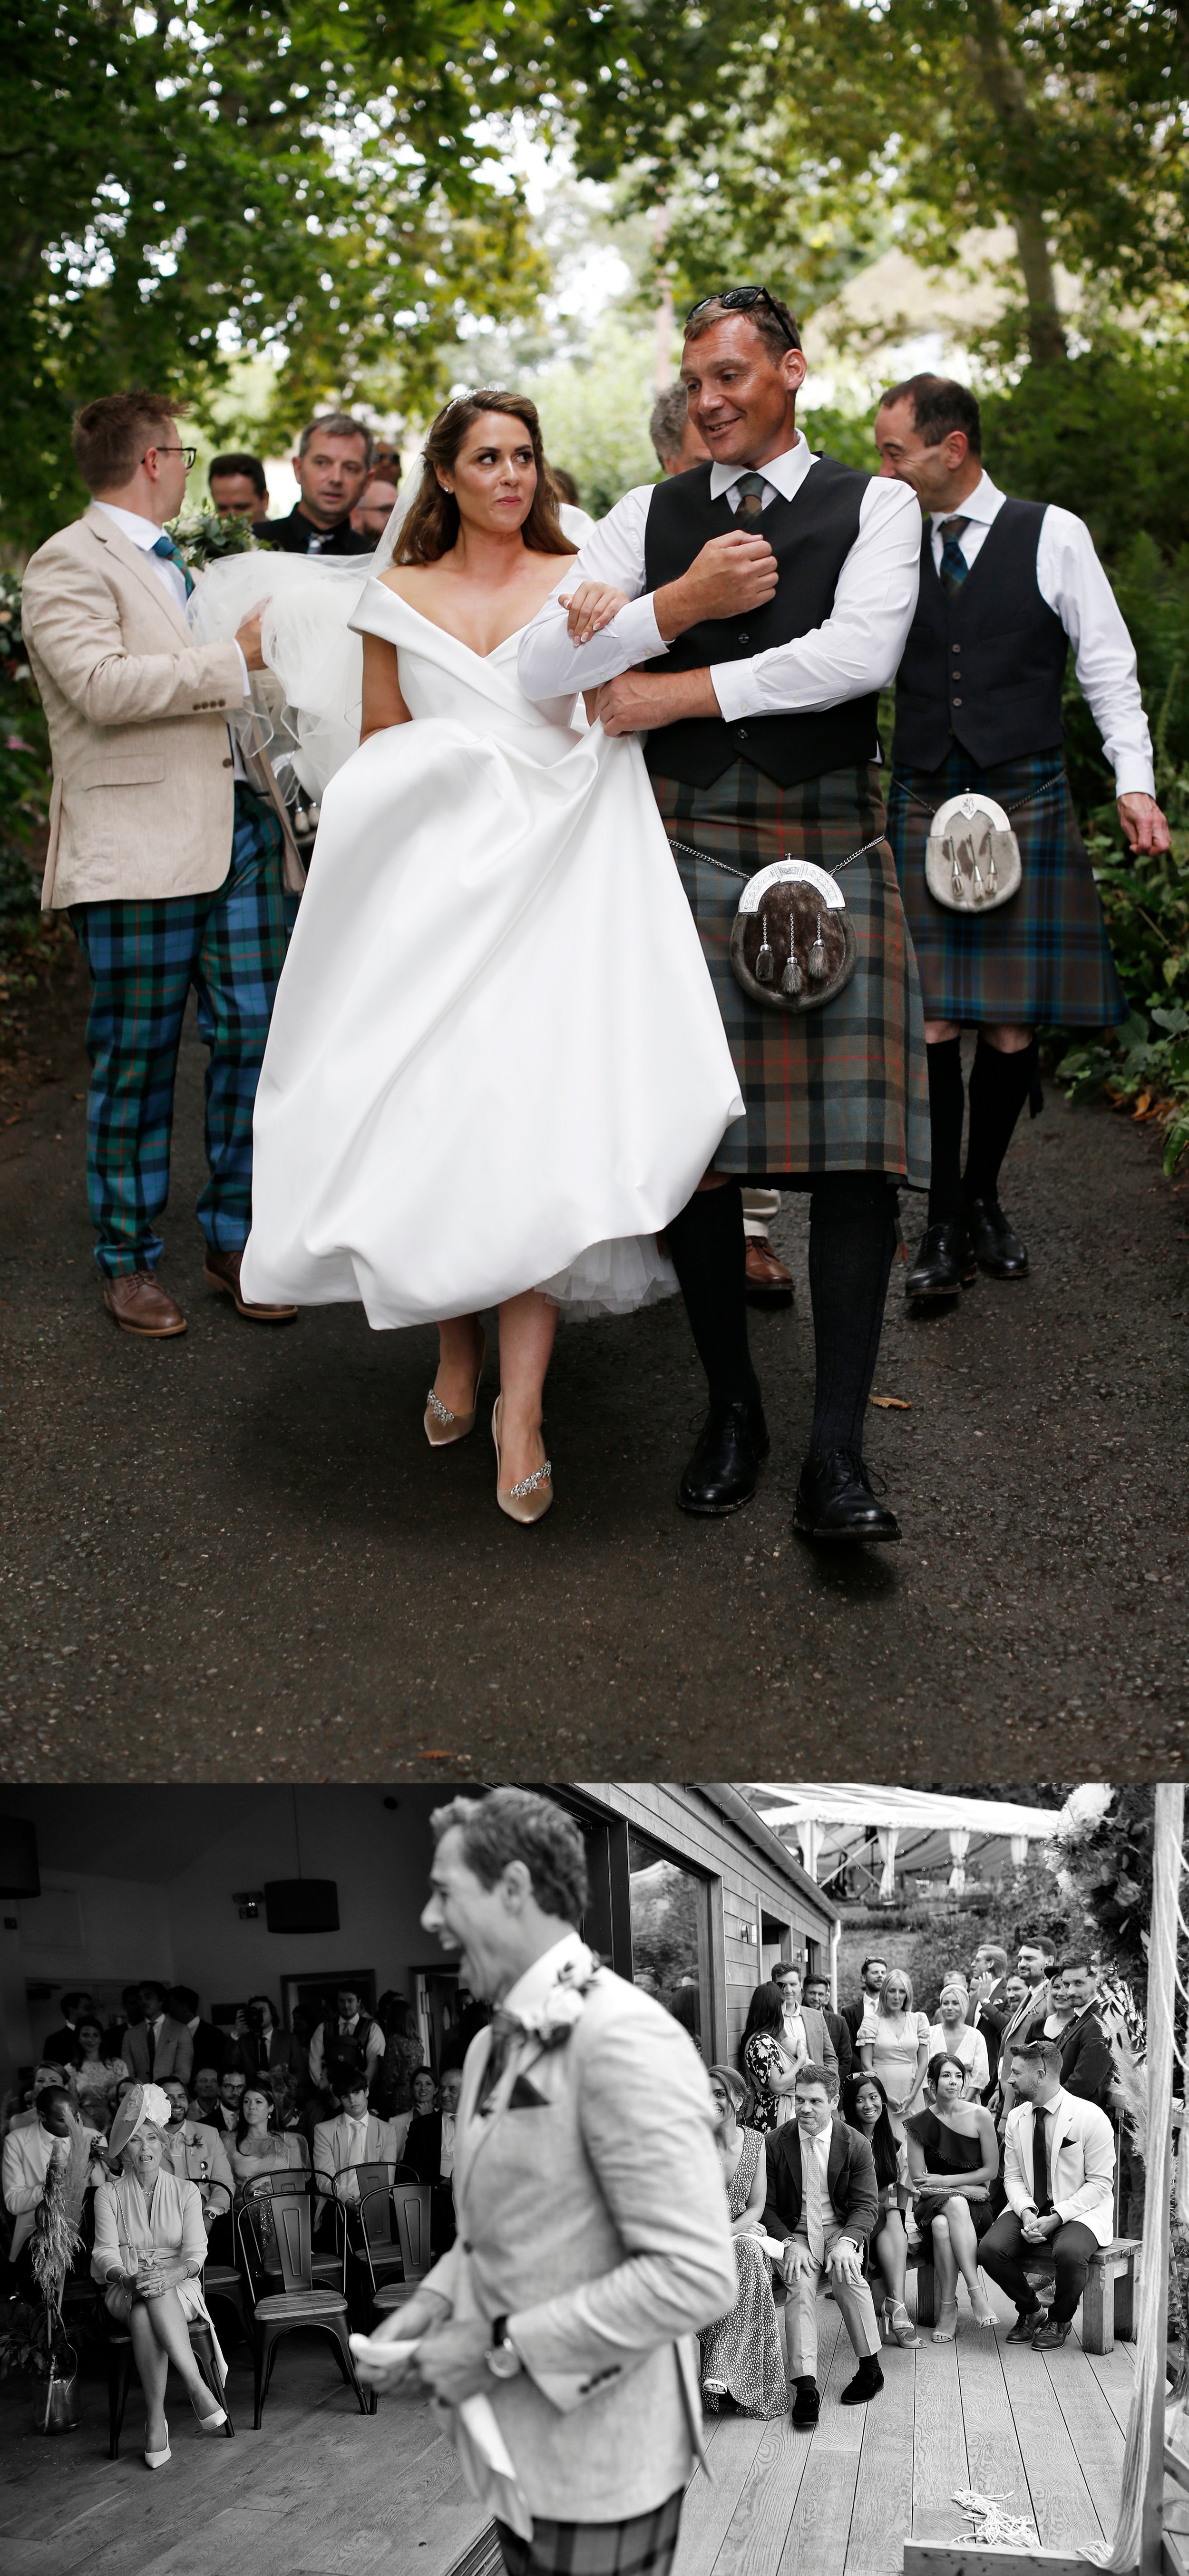 PortwaterHouse+Wedding+Photography+_+Brett+Harkness-18.jpg